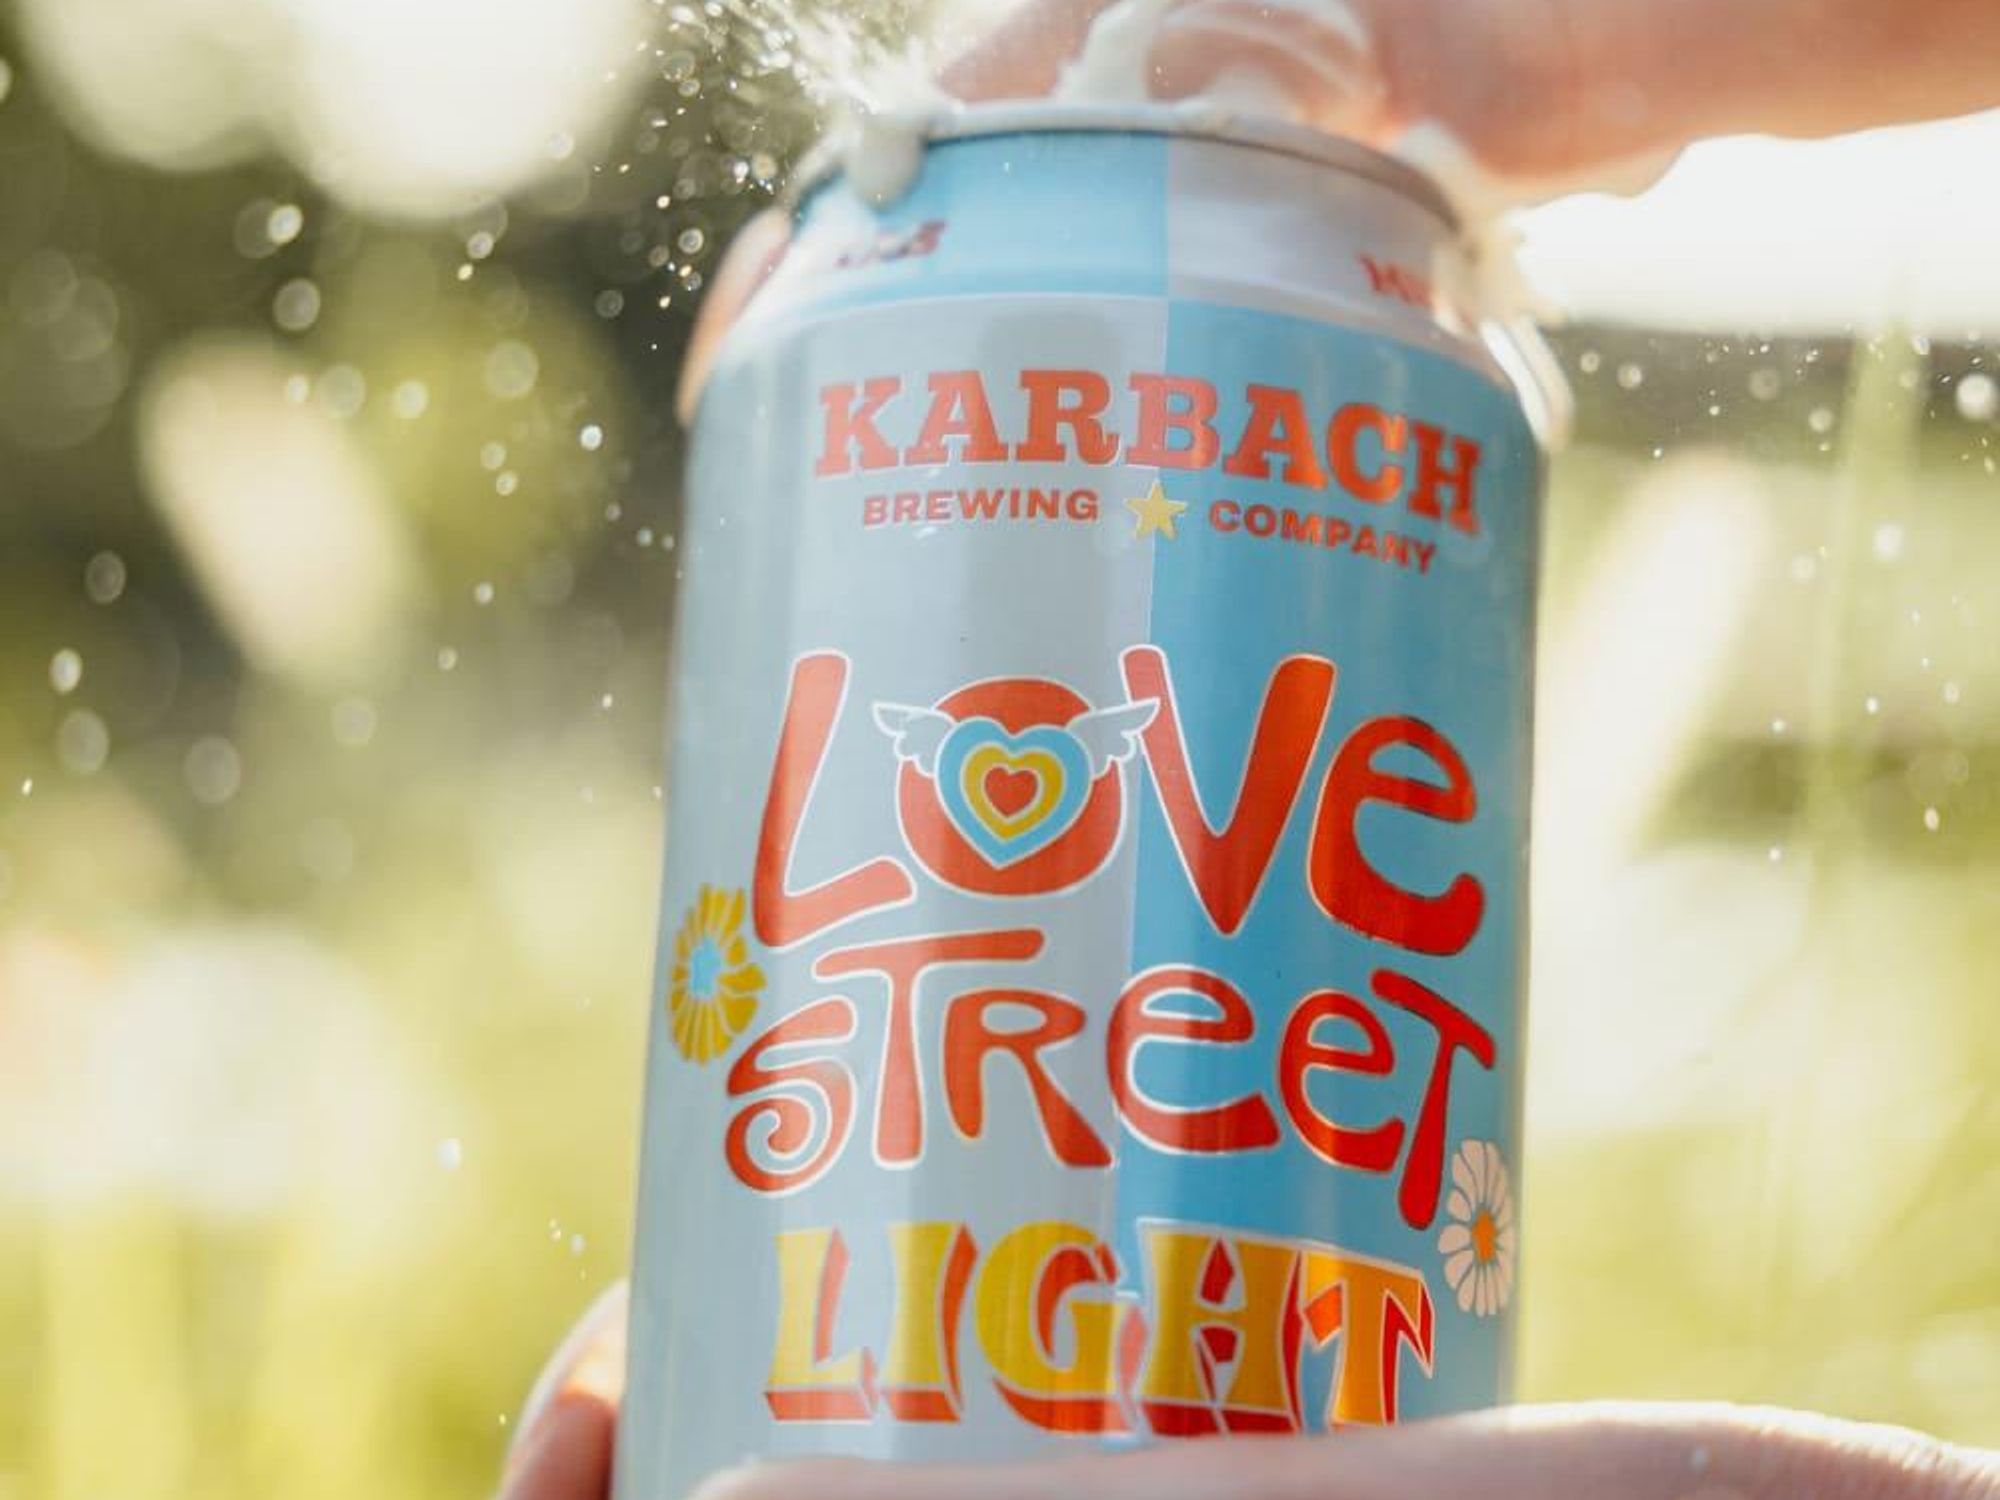 Love Street Light beer